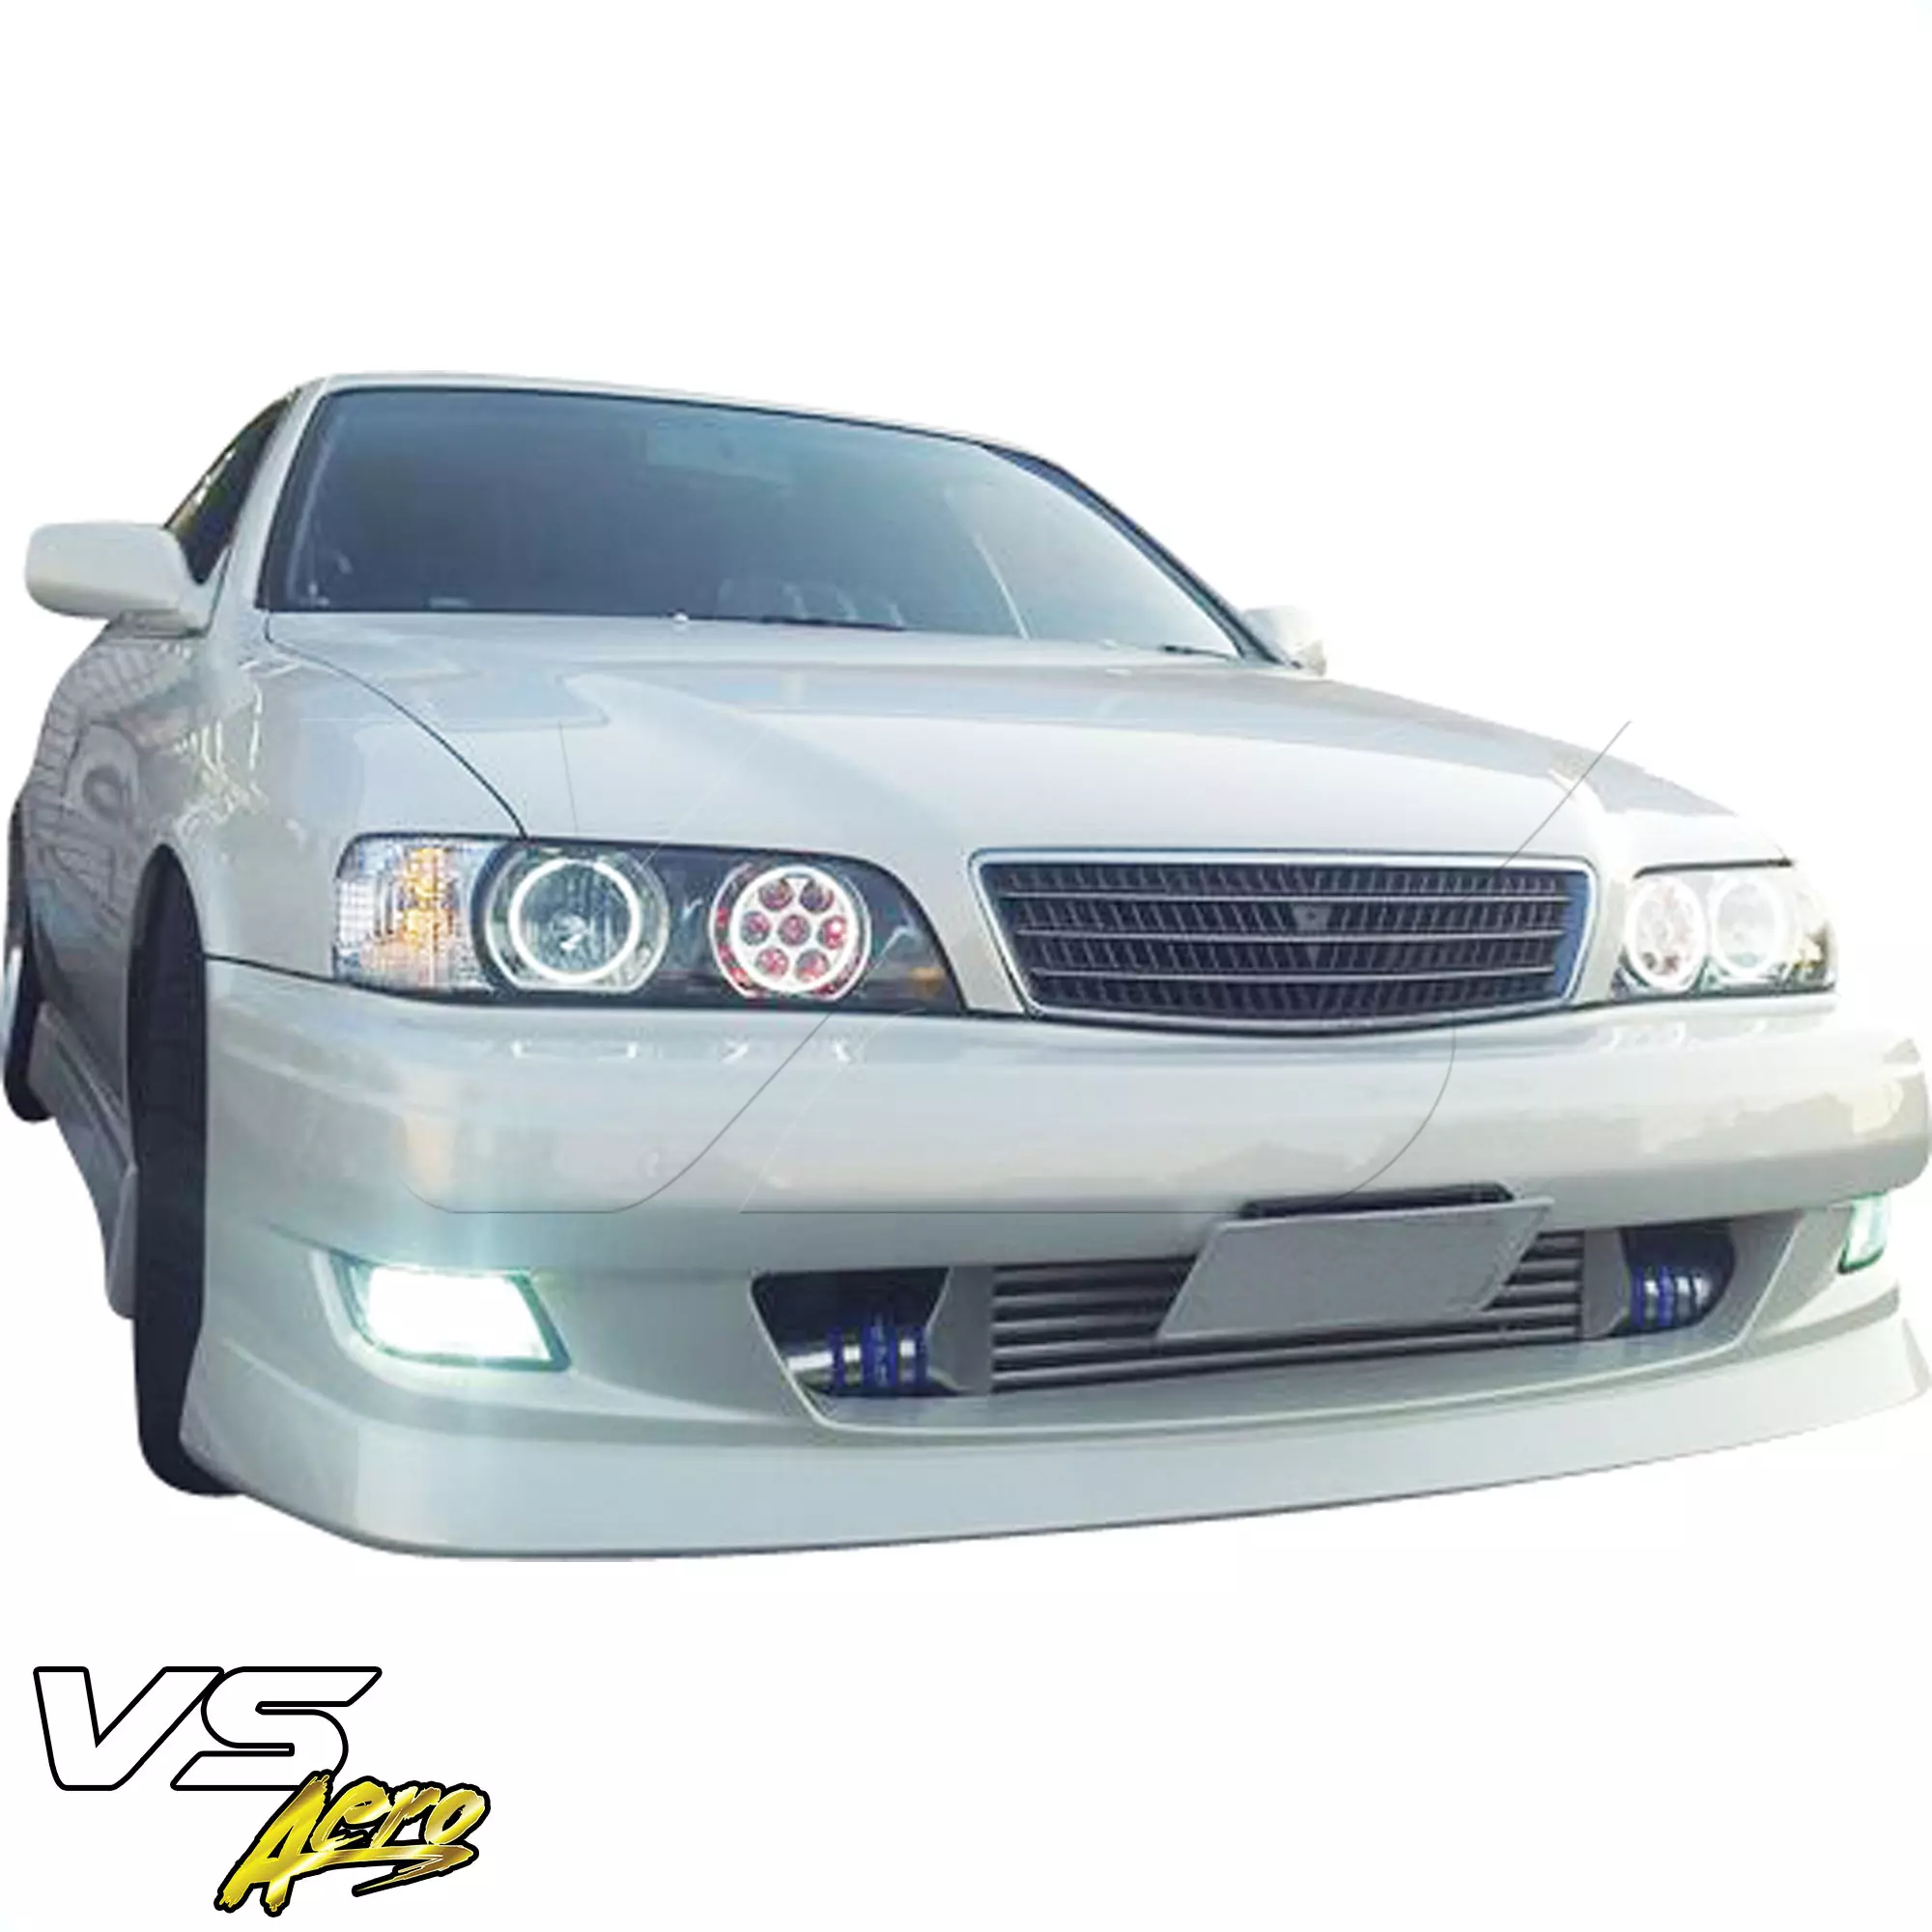 VSaero FRP URA vL Body Kit 4pc > Toyota Chaser JZX100 1996-2000 - Image 8